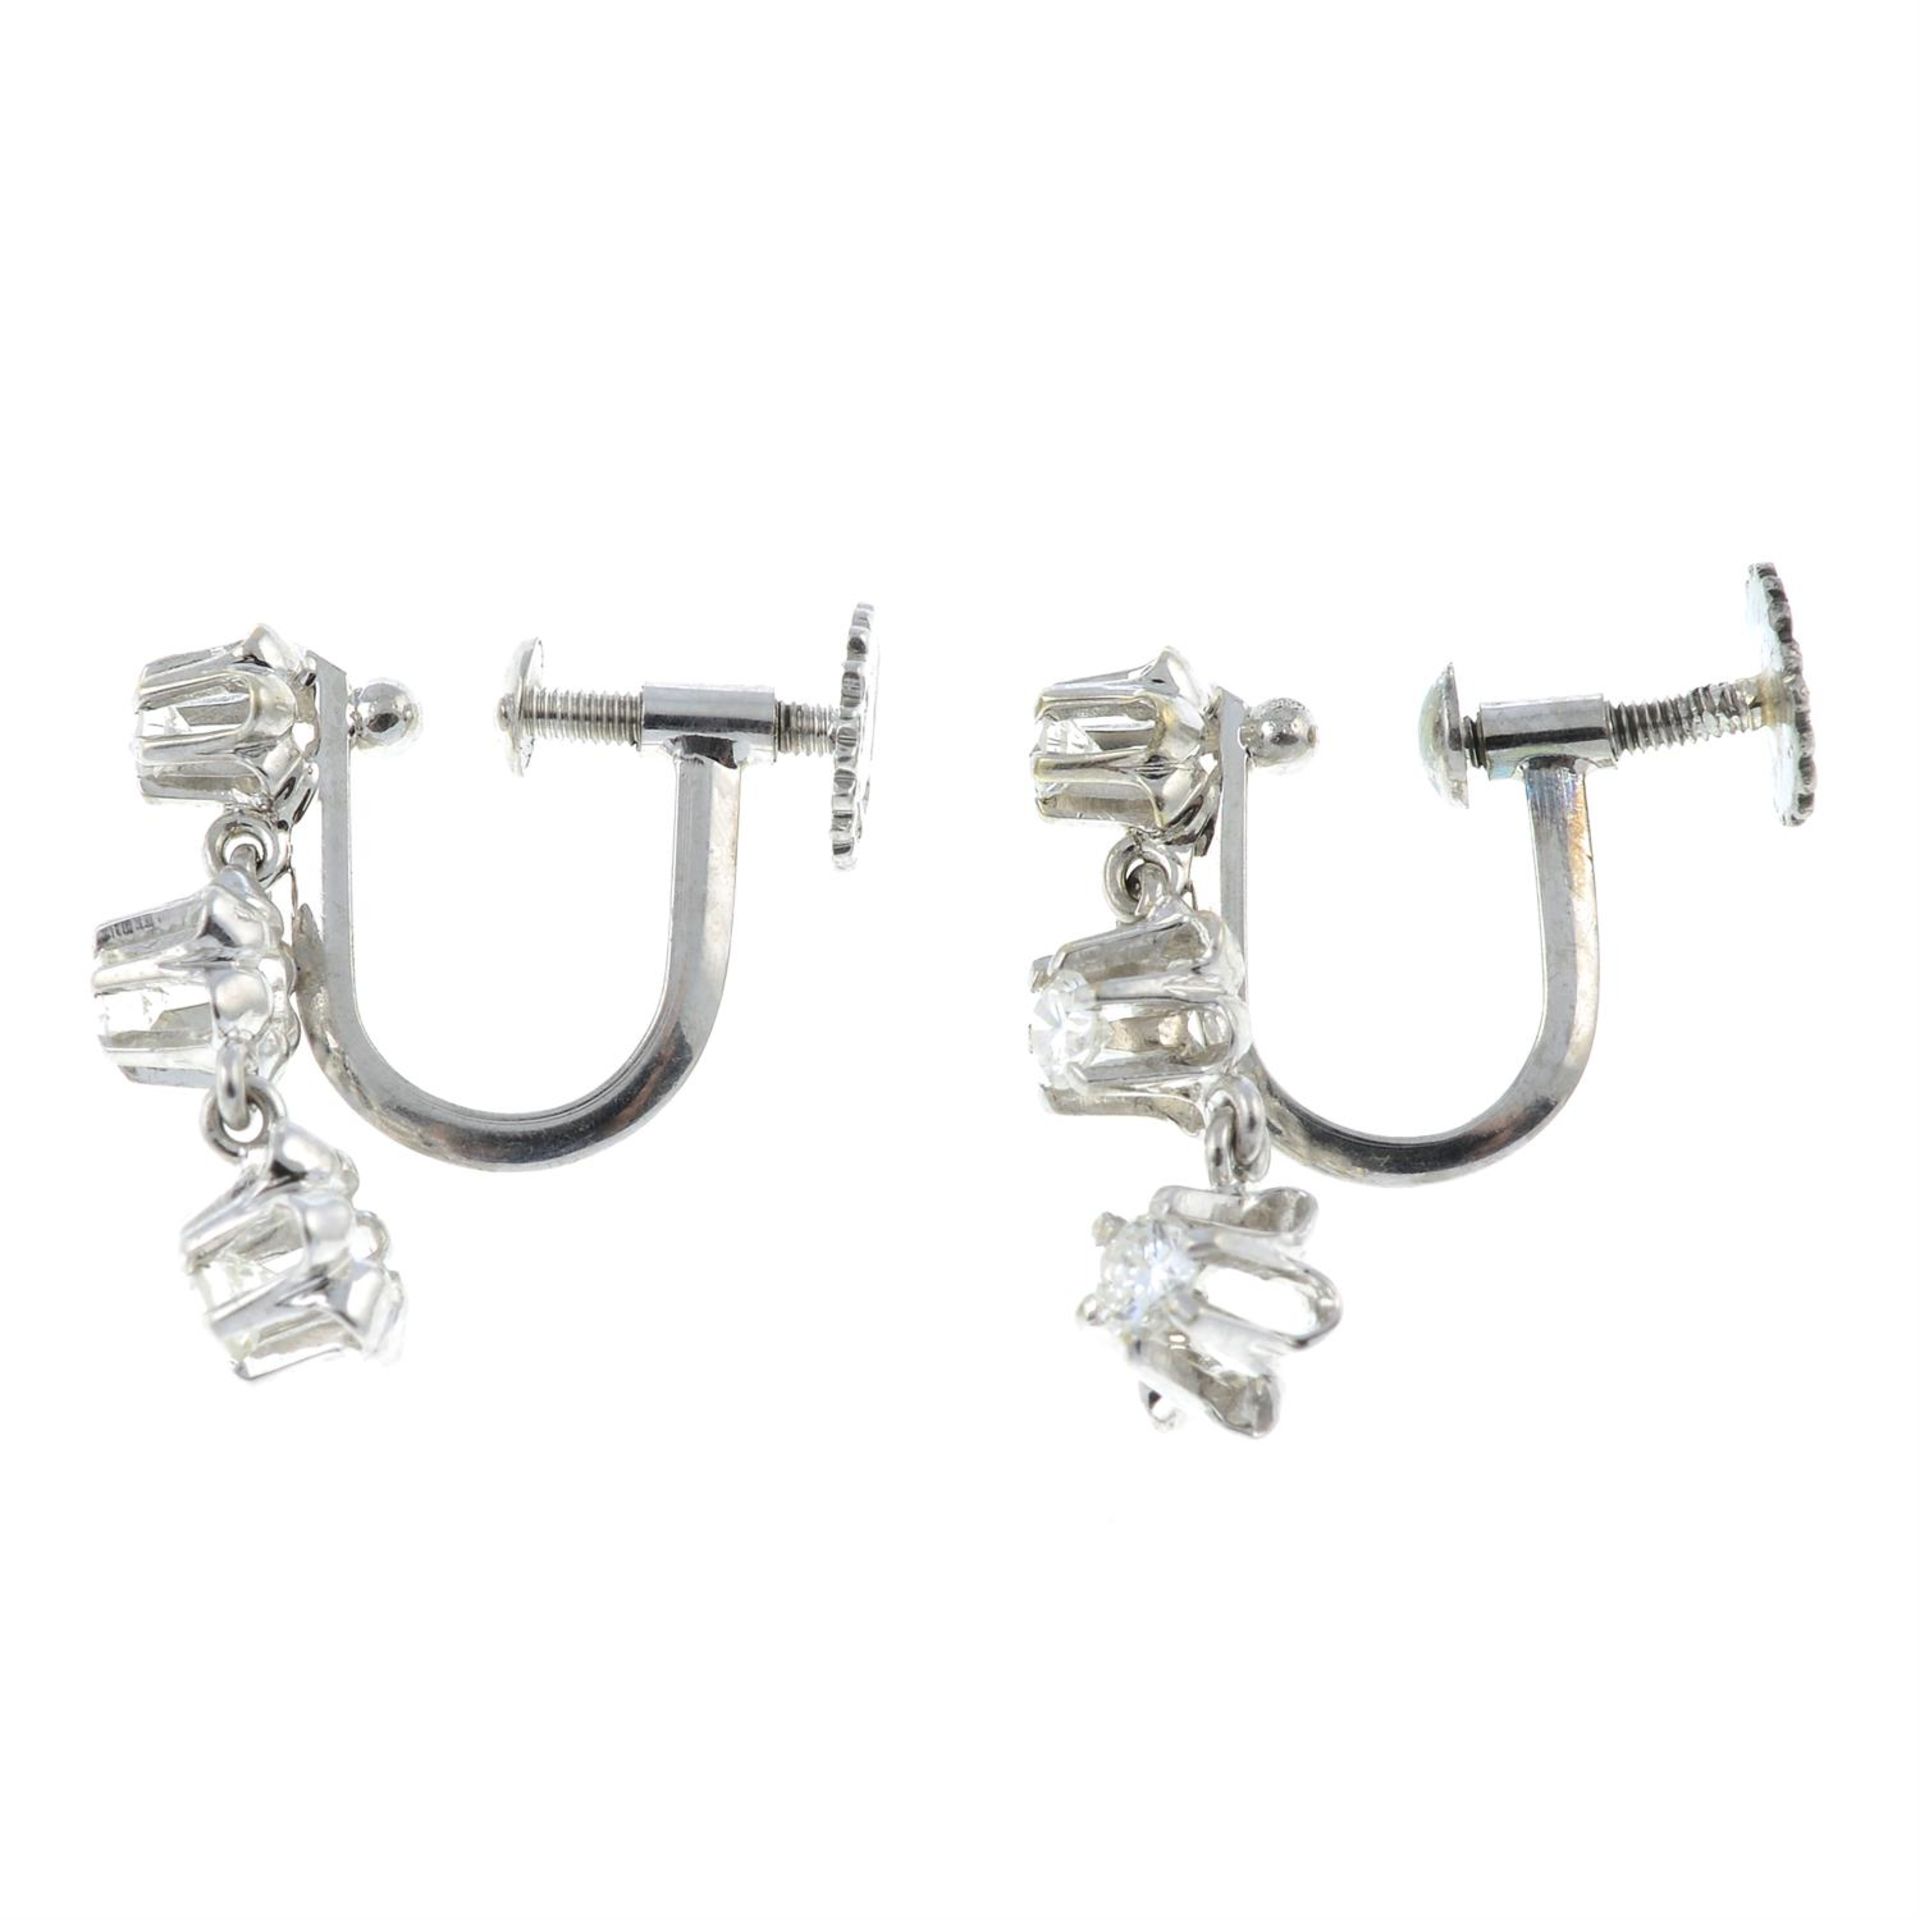 A pair of diamond drop earrings, by Gustav Dahlgren & Co. - Image 2 of 2